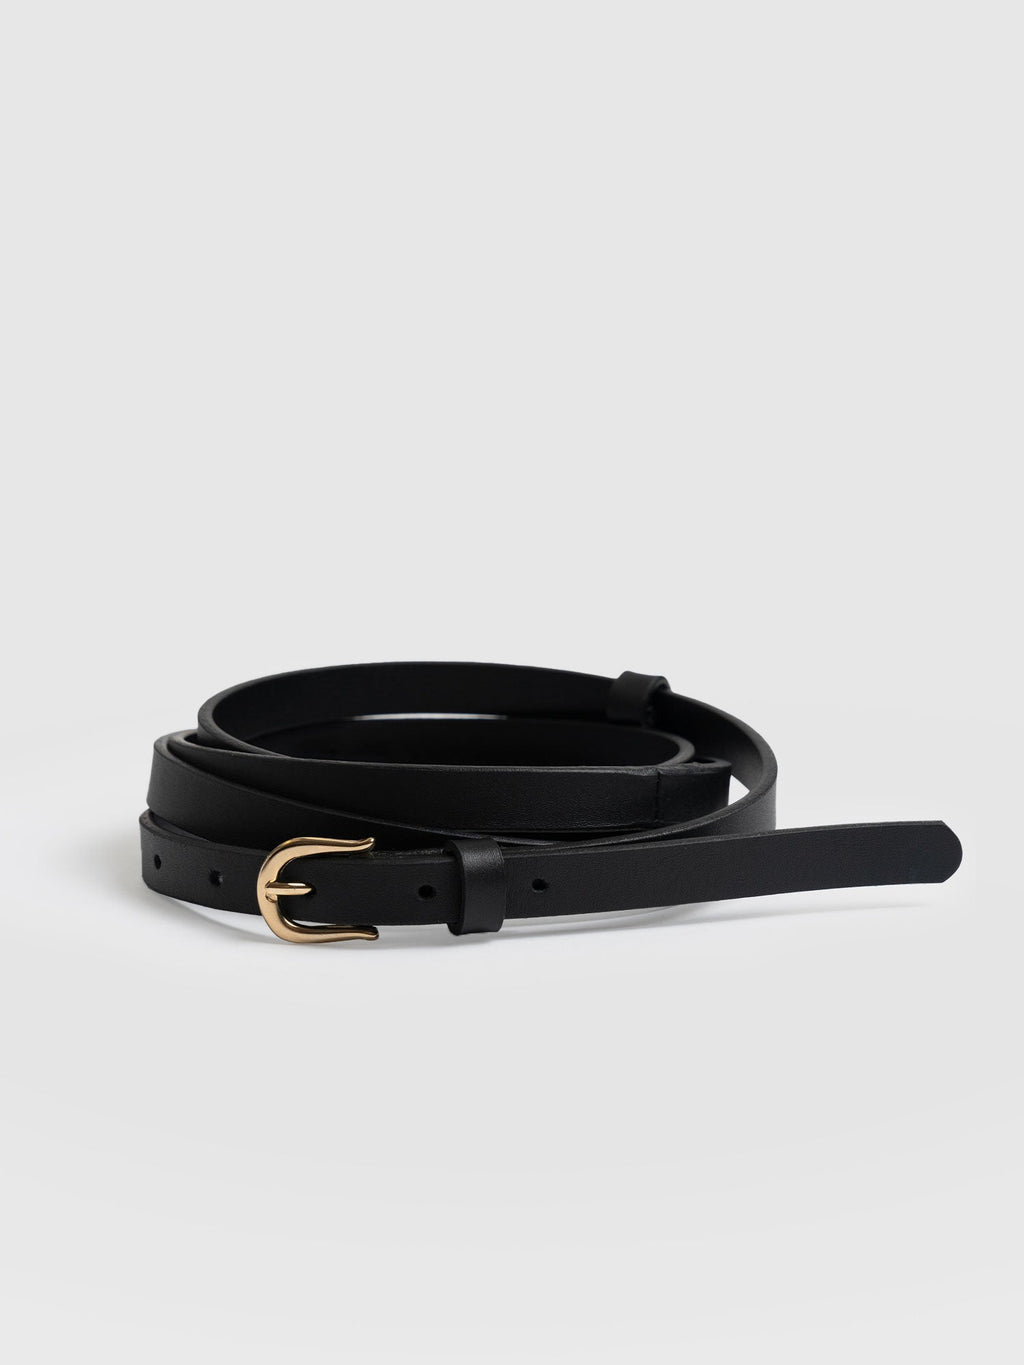 Marina black leather waist belt